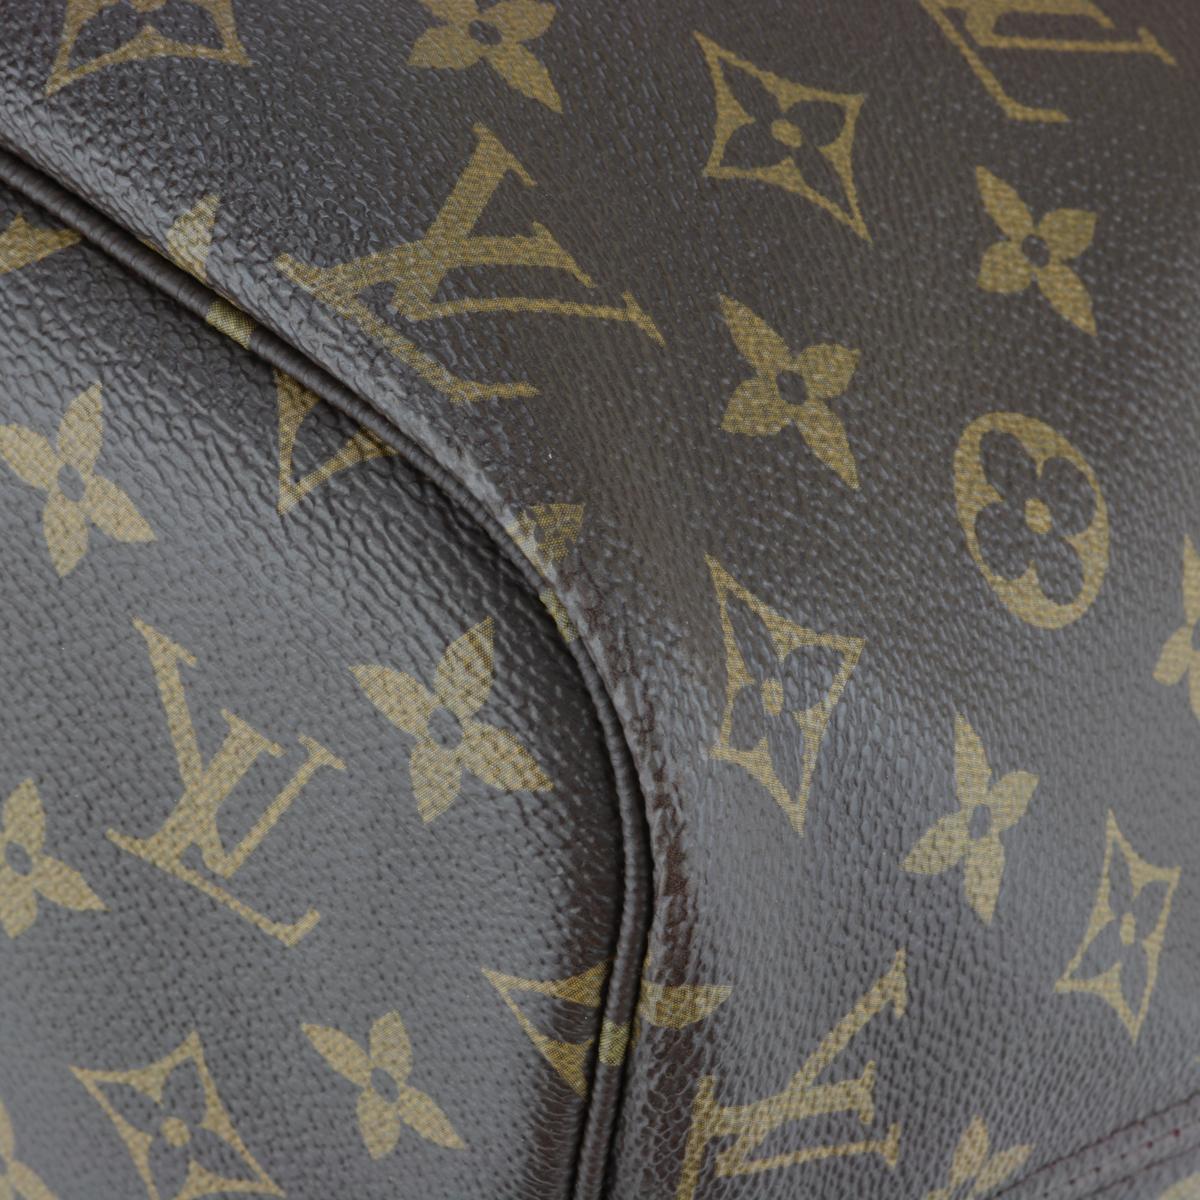 Louis Vuitton Neverfull MM Bag in Monogram with Pivoine Interior 2019 5